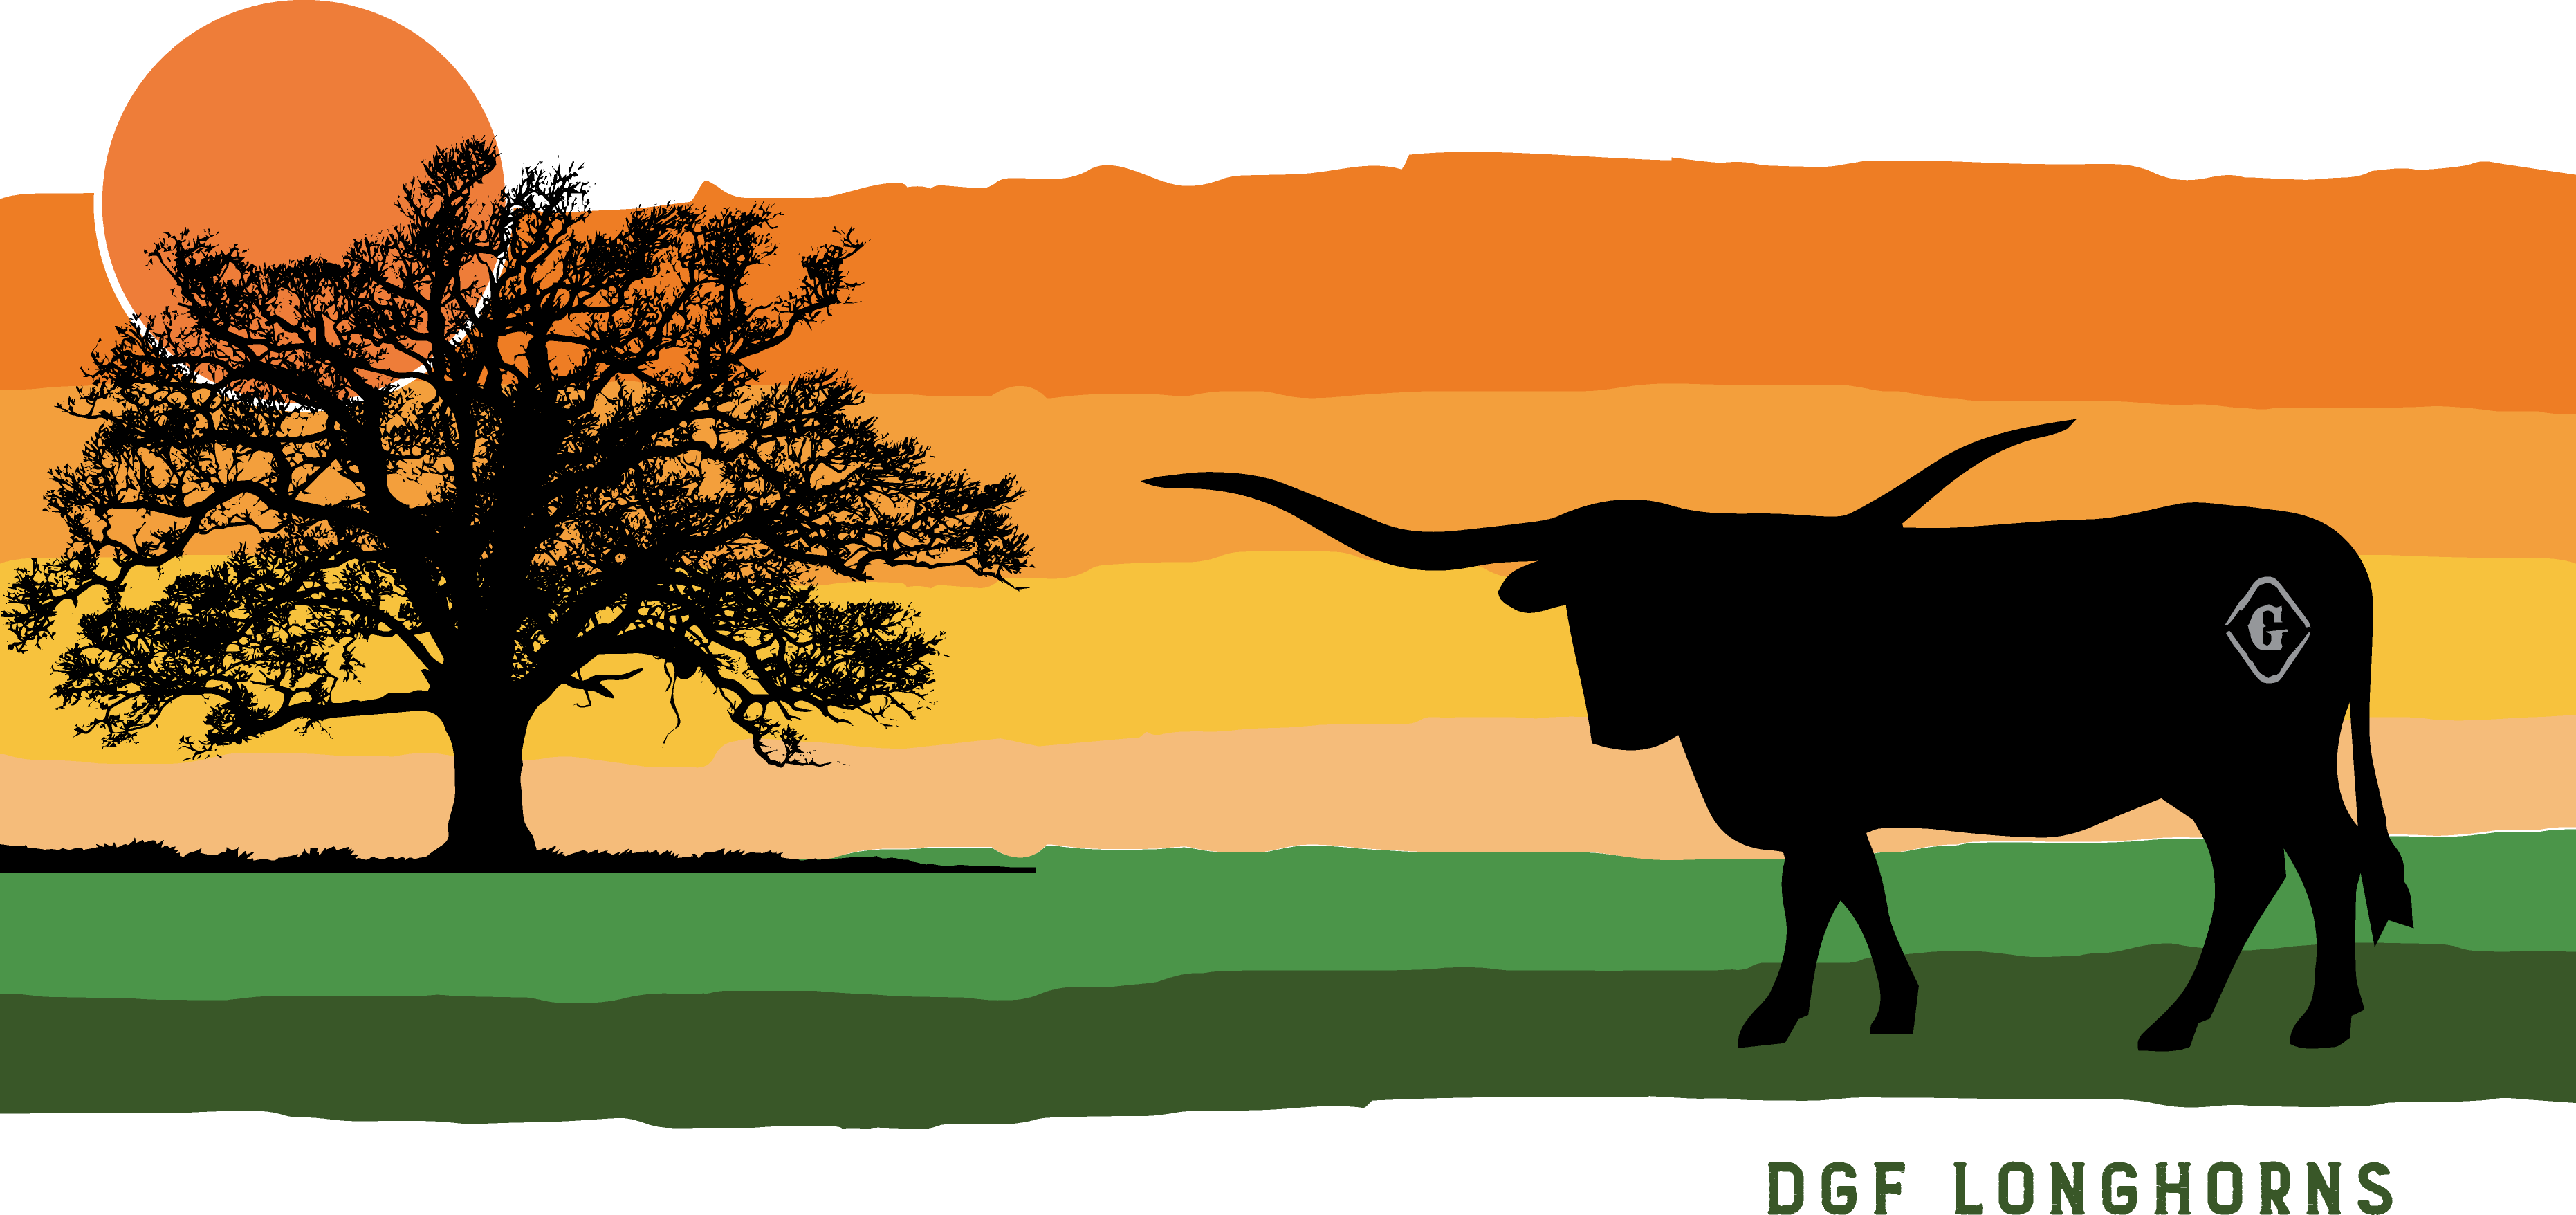 DGF Longhorns logo